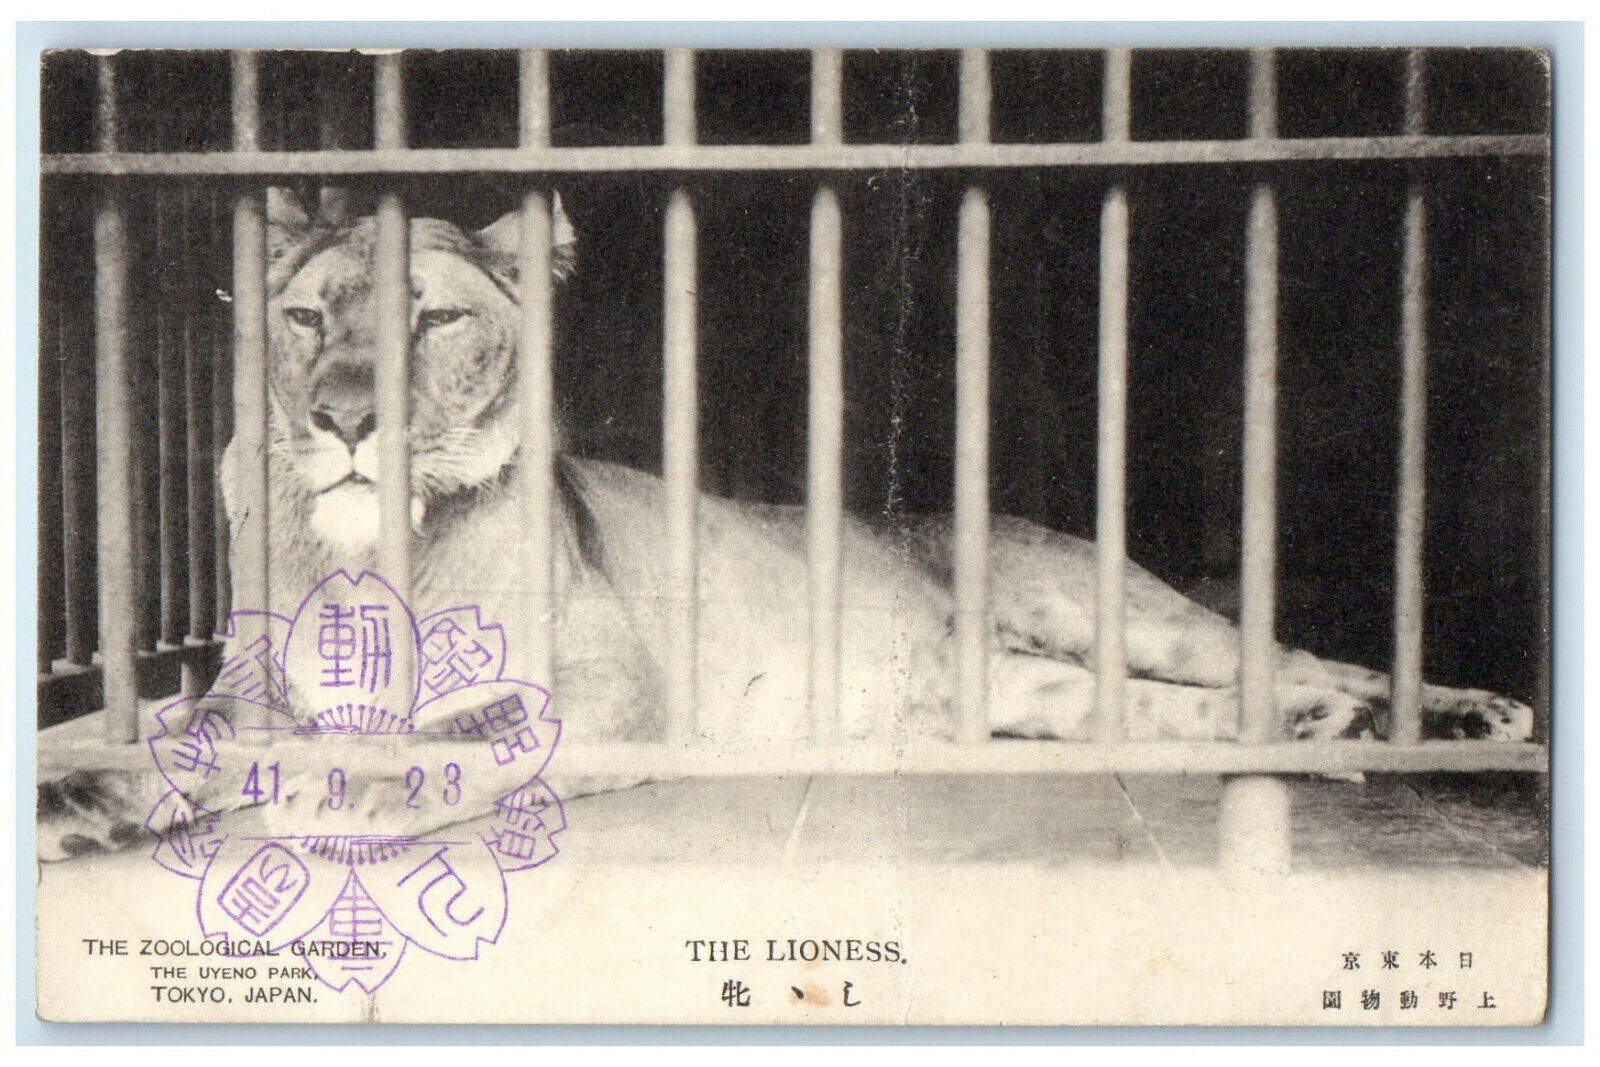 1925 The Zoological Garden The Uyeno Park Tokyo Japan Vintage Postcard